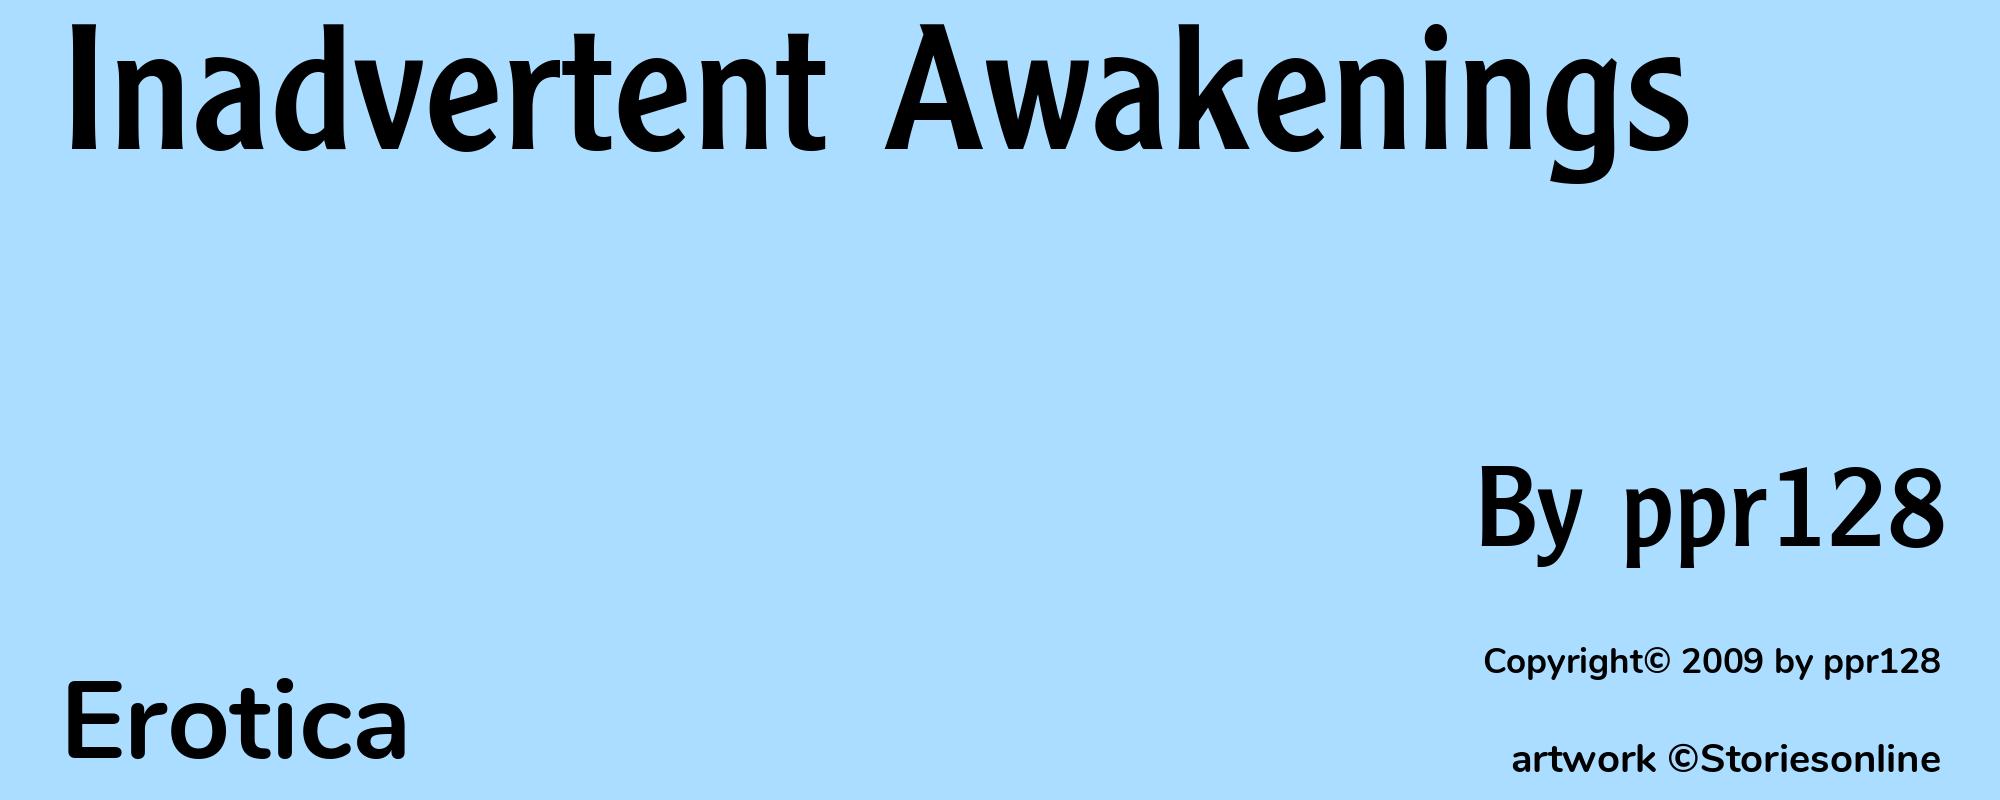 Inadvertent Awakenings - Cover